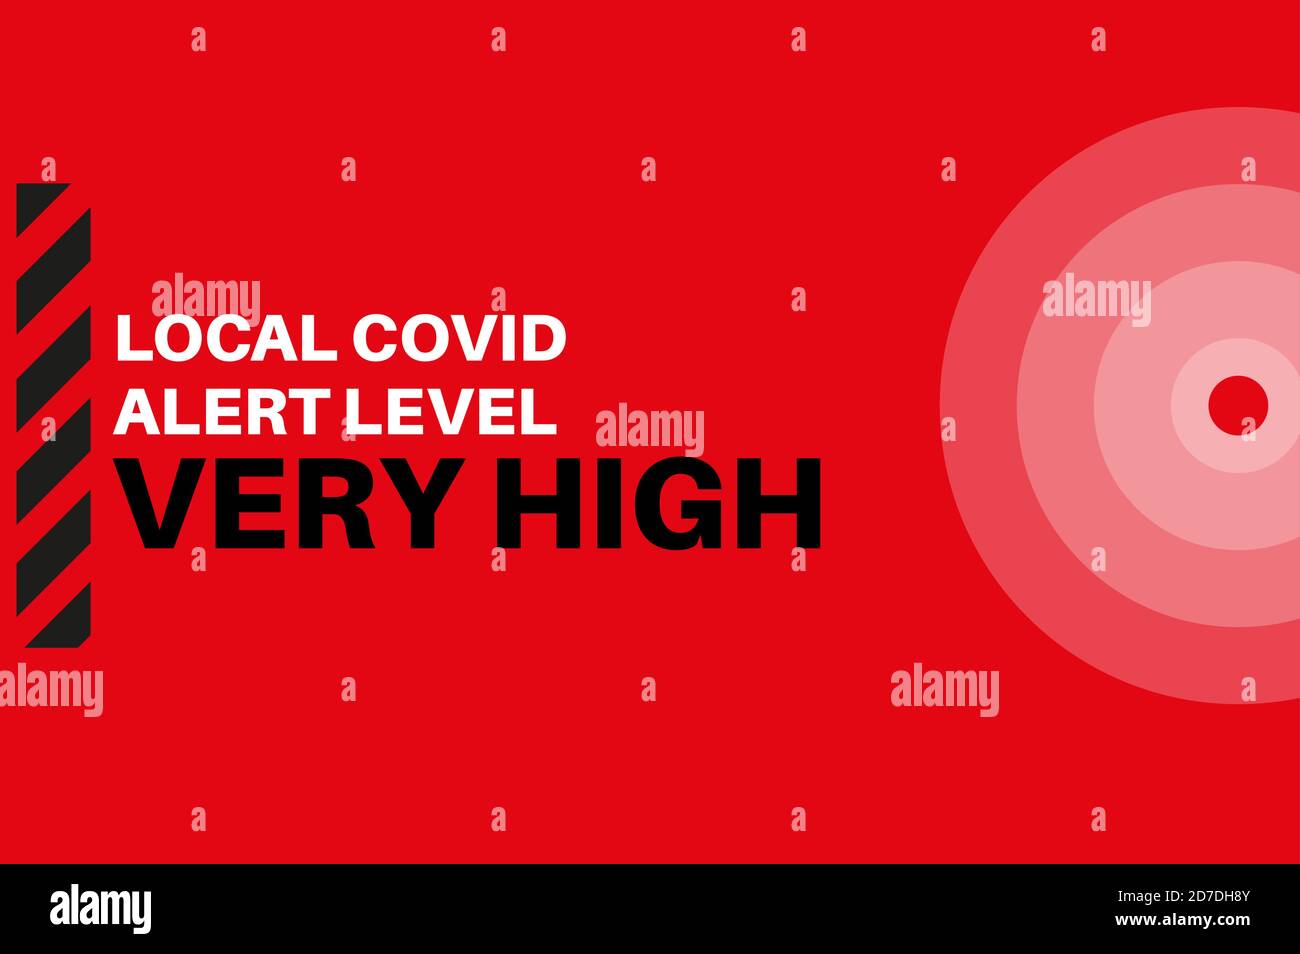 Very high Local Covid Alert Level (Tier 3) Vector Illustration Stock Vector